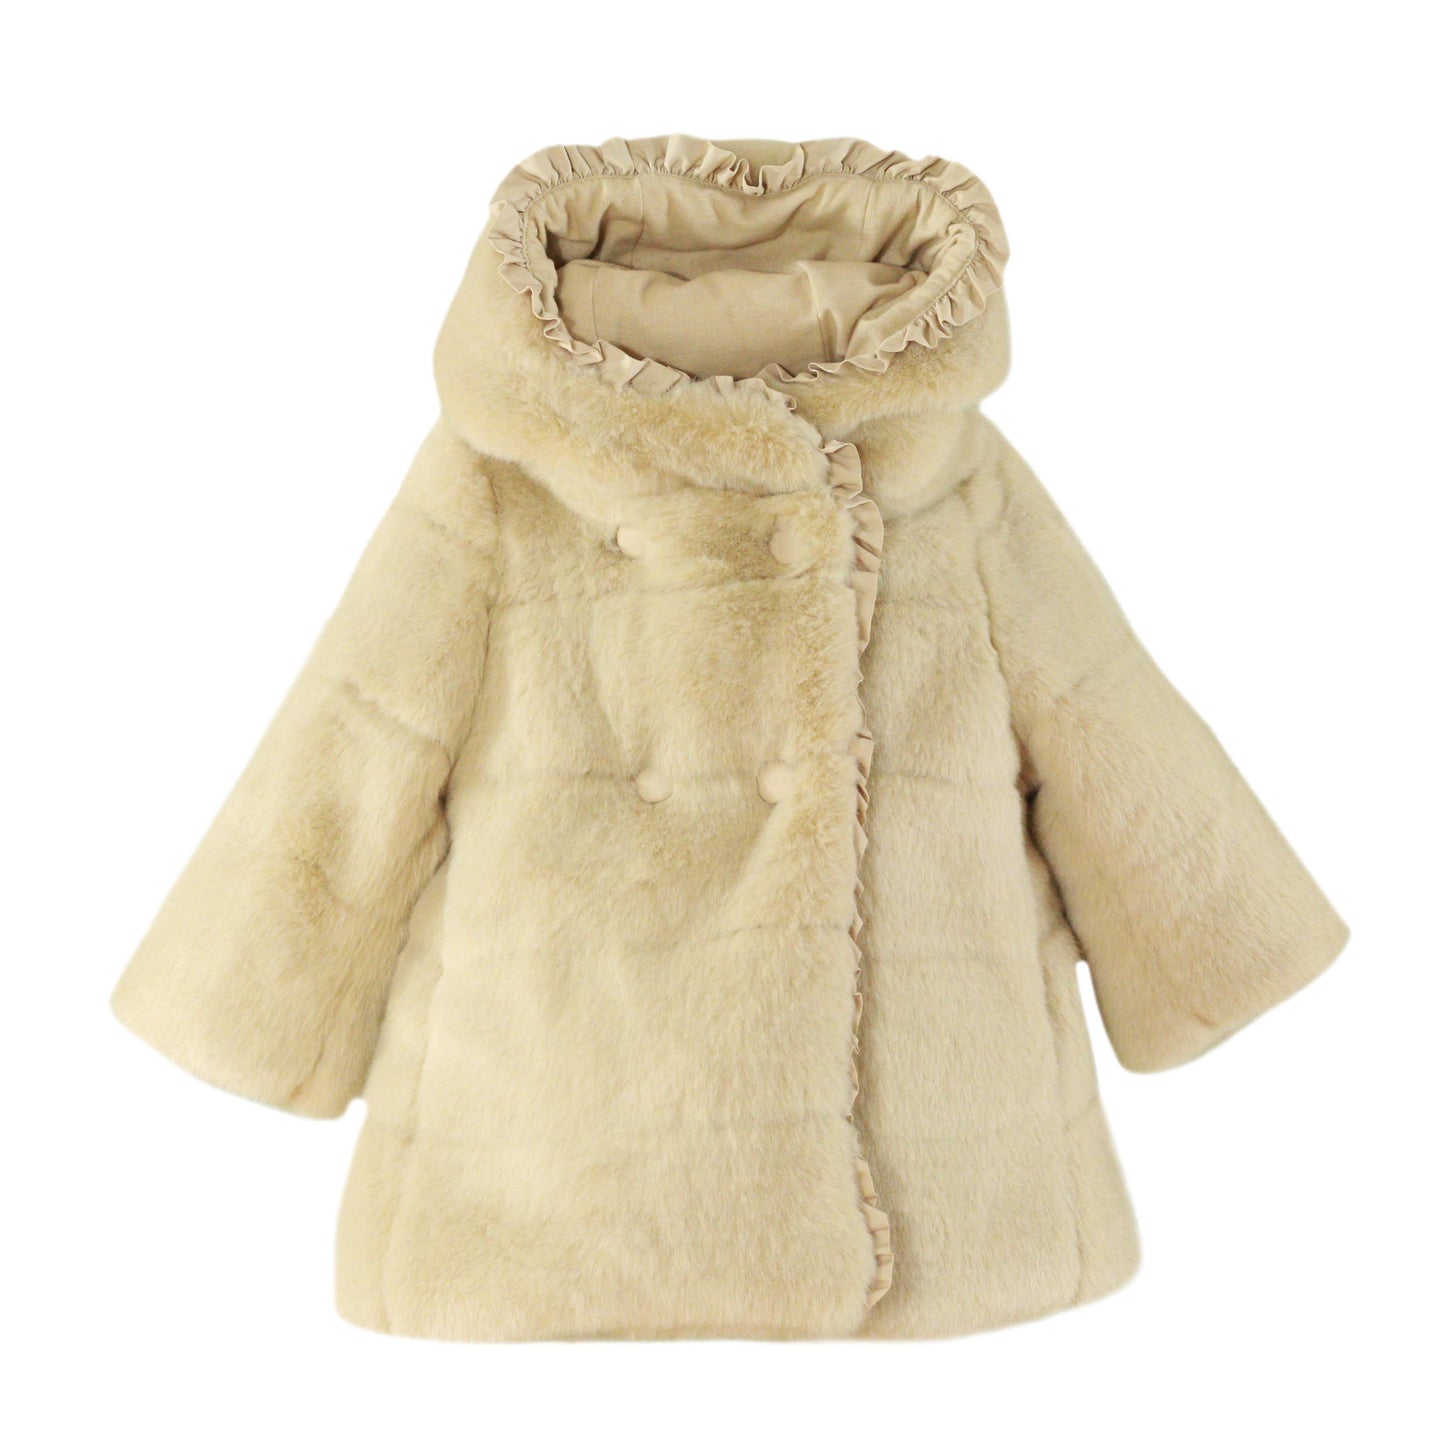 MIRANDA Beige Faux Fur Baby Girls Coat